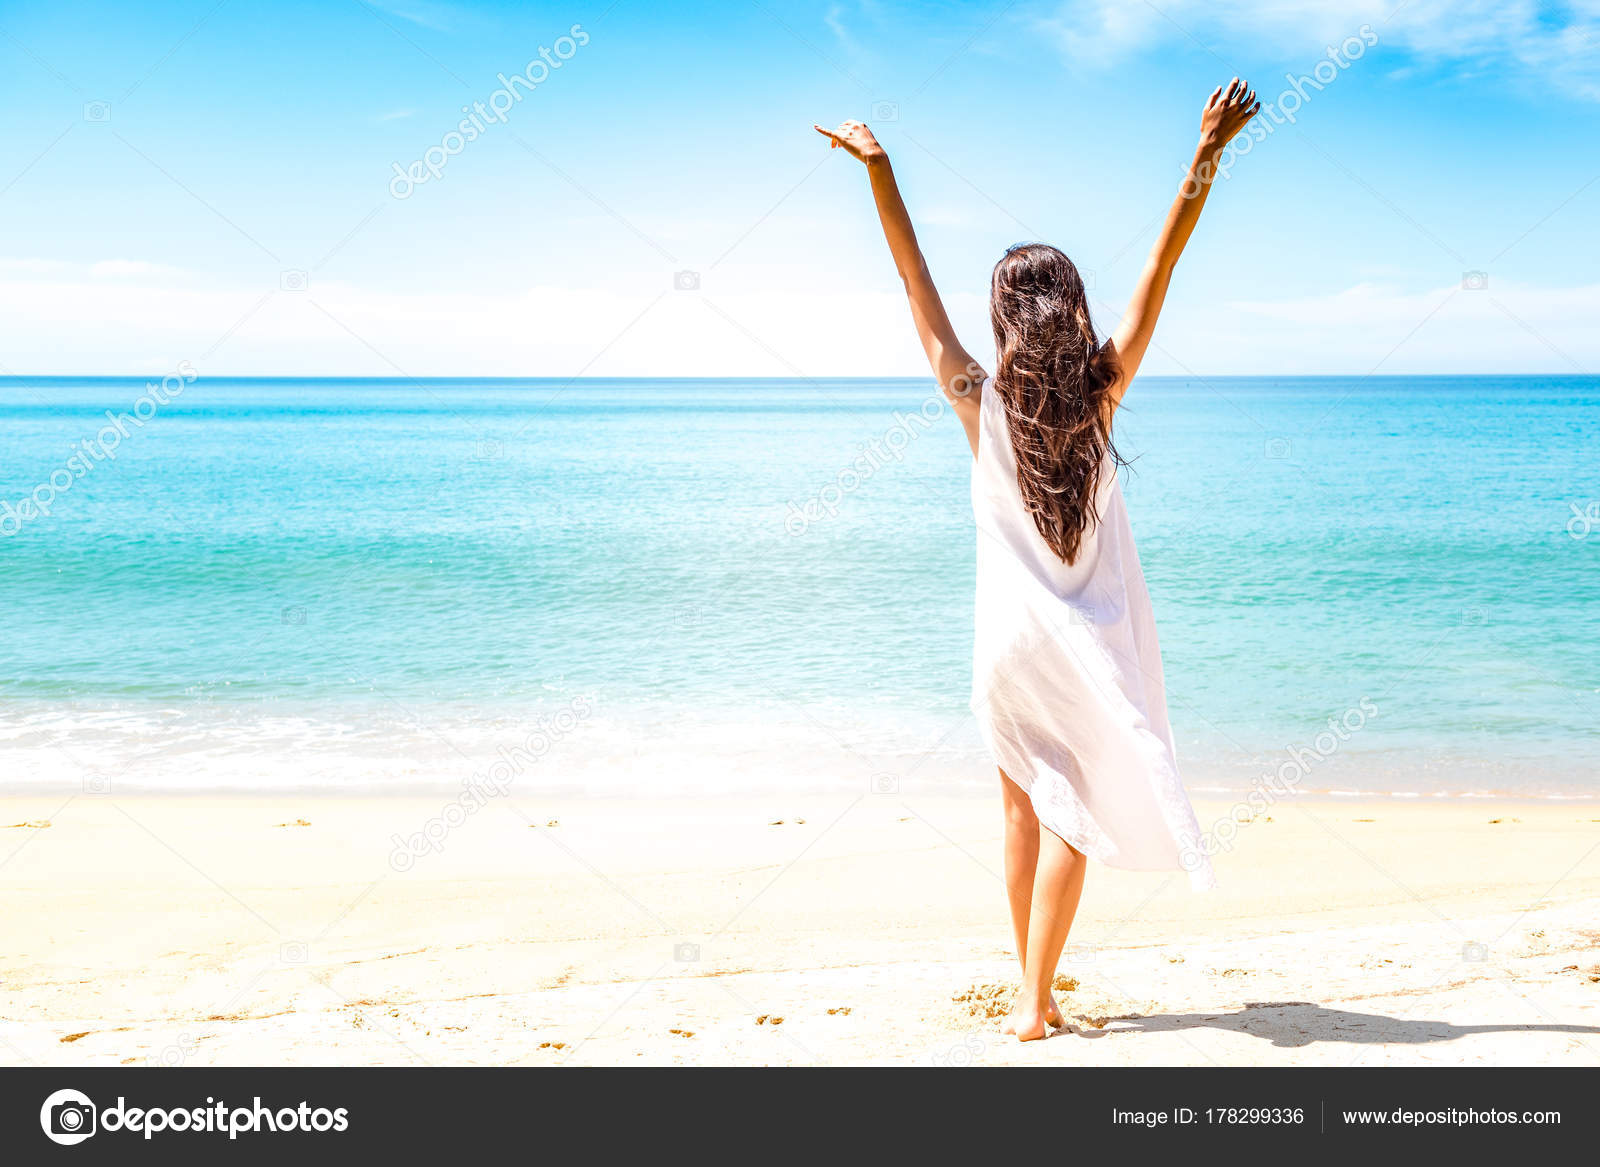 25+ Awesome Beach Photoshoot Ideas - The Digital Day Dream